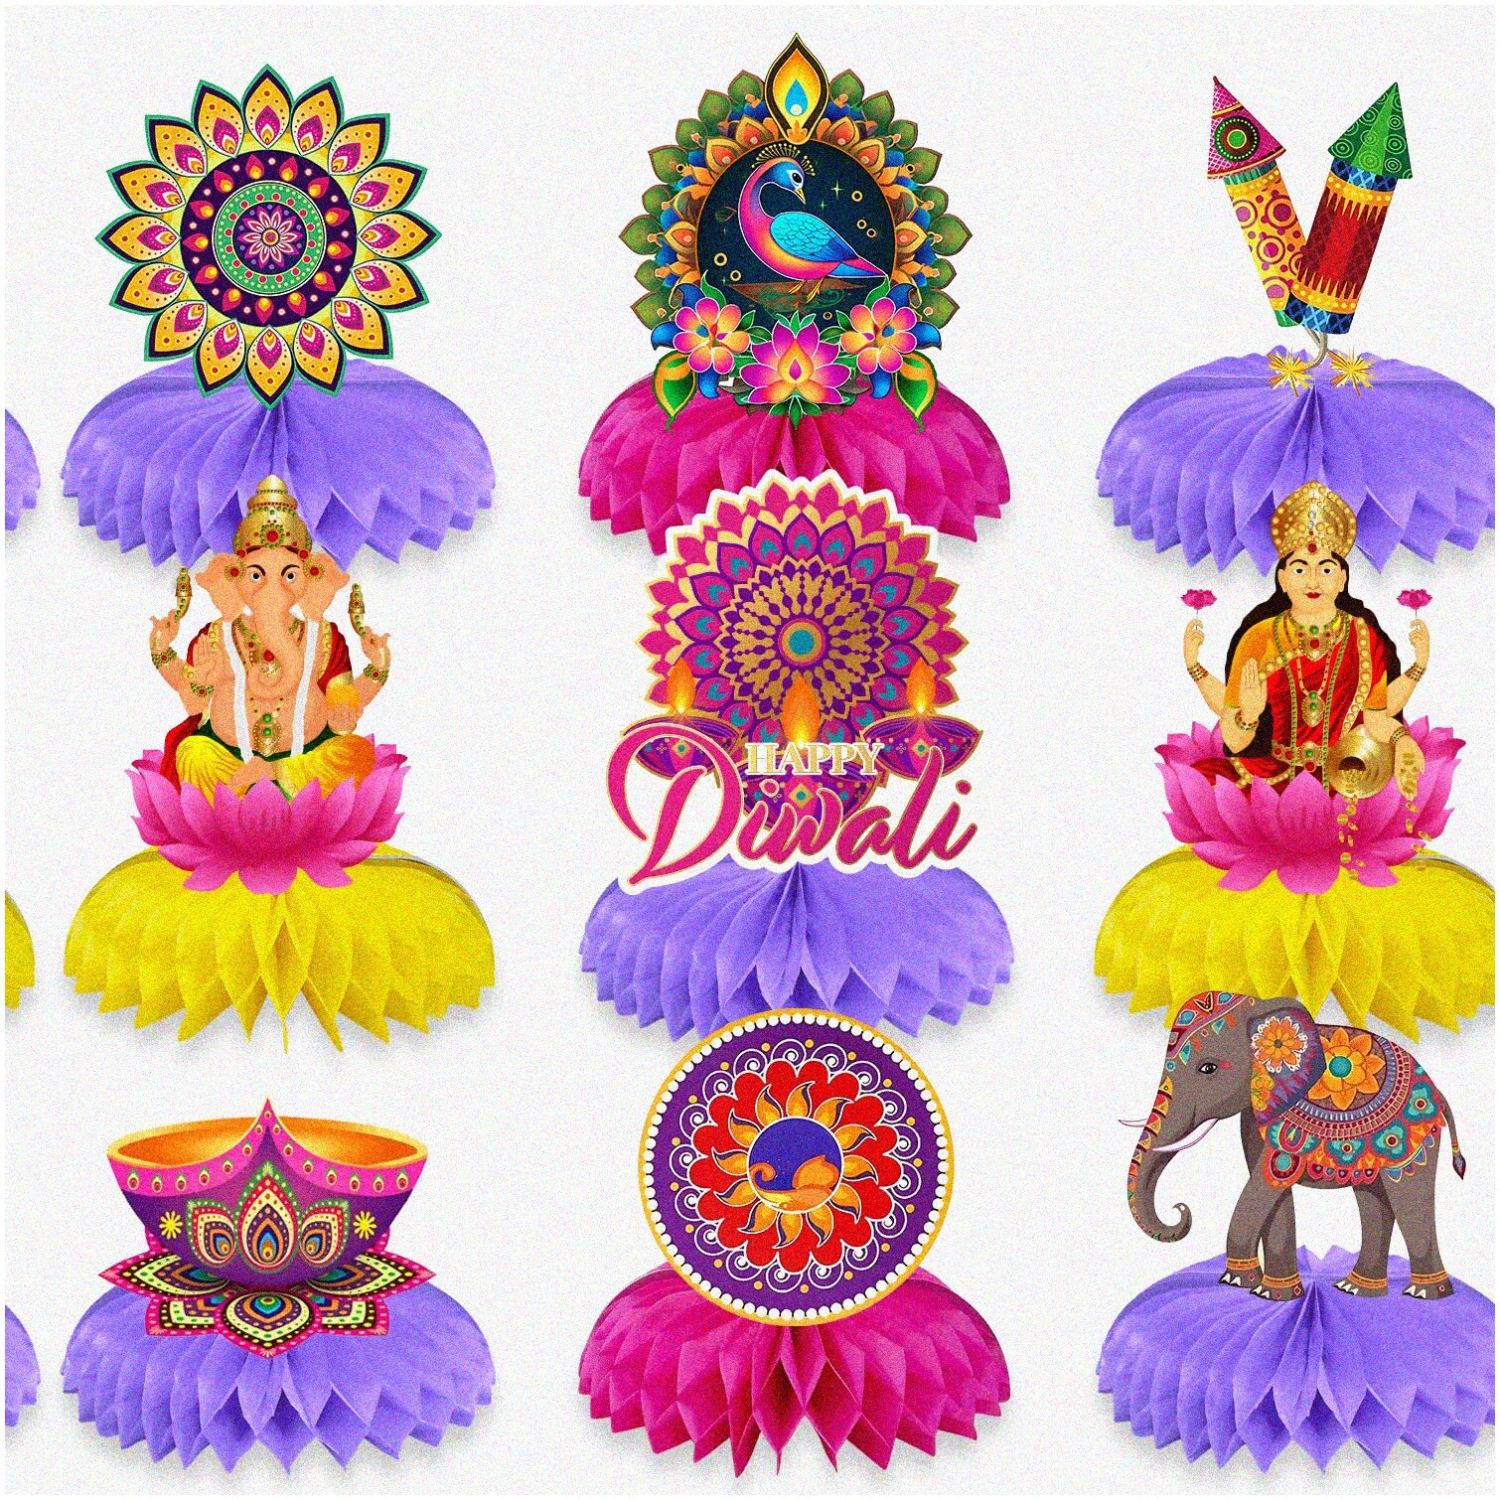 Diwali Delight Honeycomb Centerpieces - 9pcs Festive Table Decorations for India's Festival of Lights & Deepawali Party Décor.